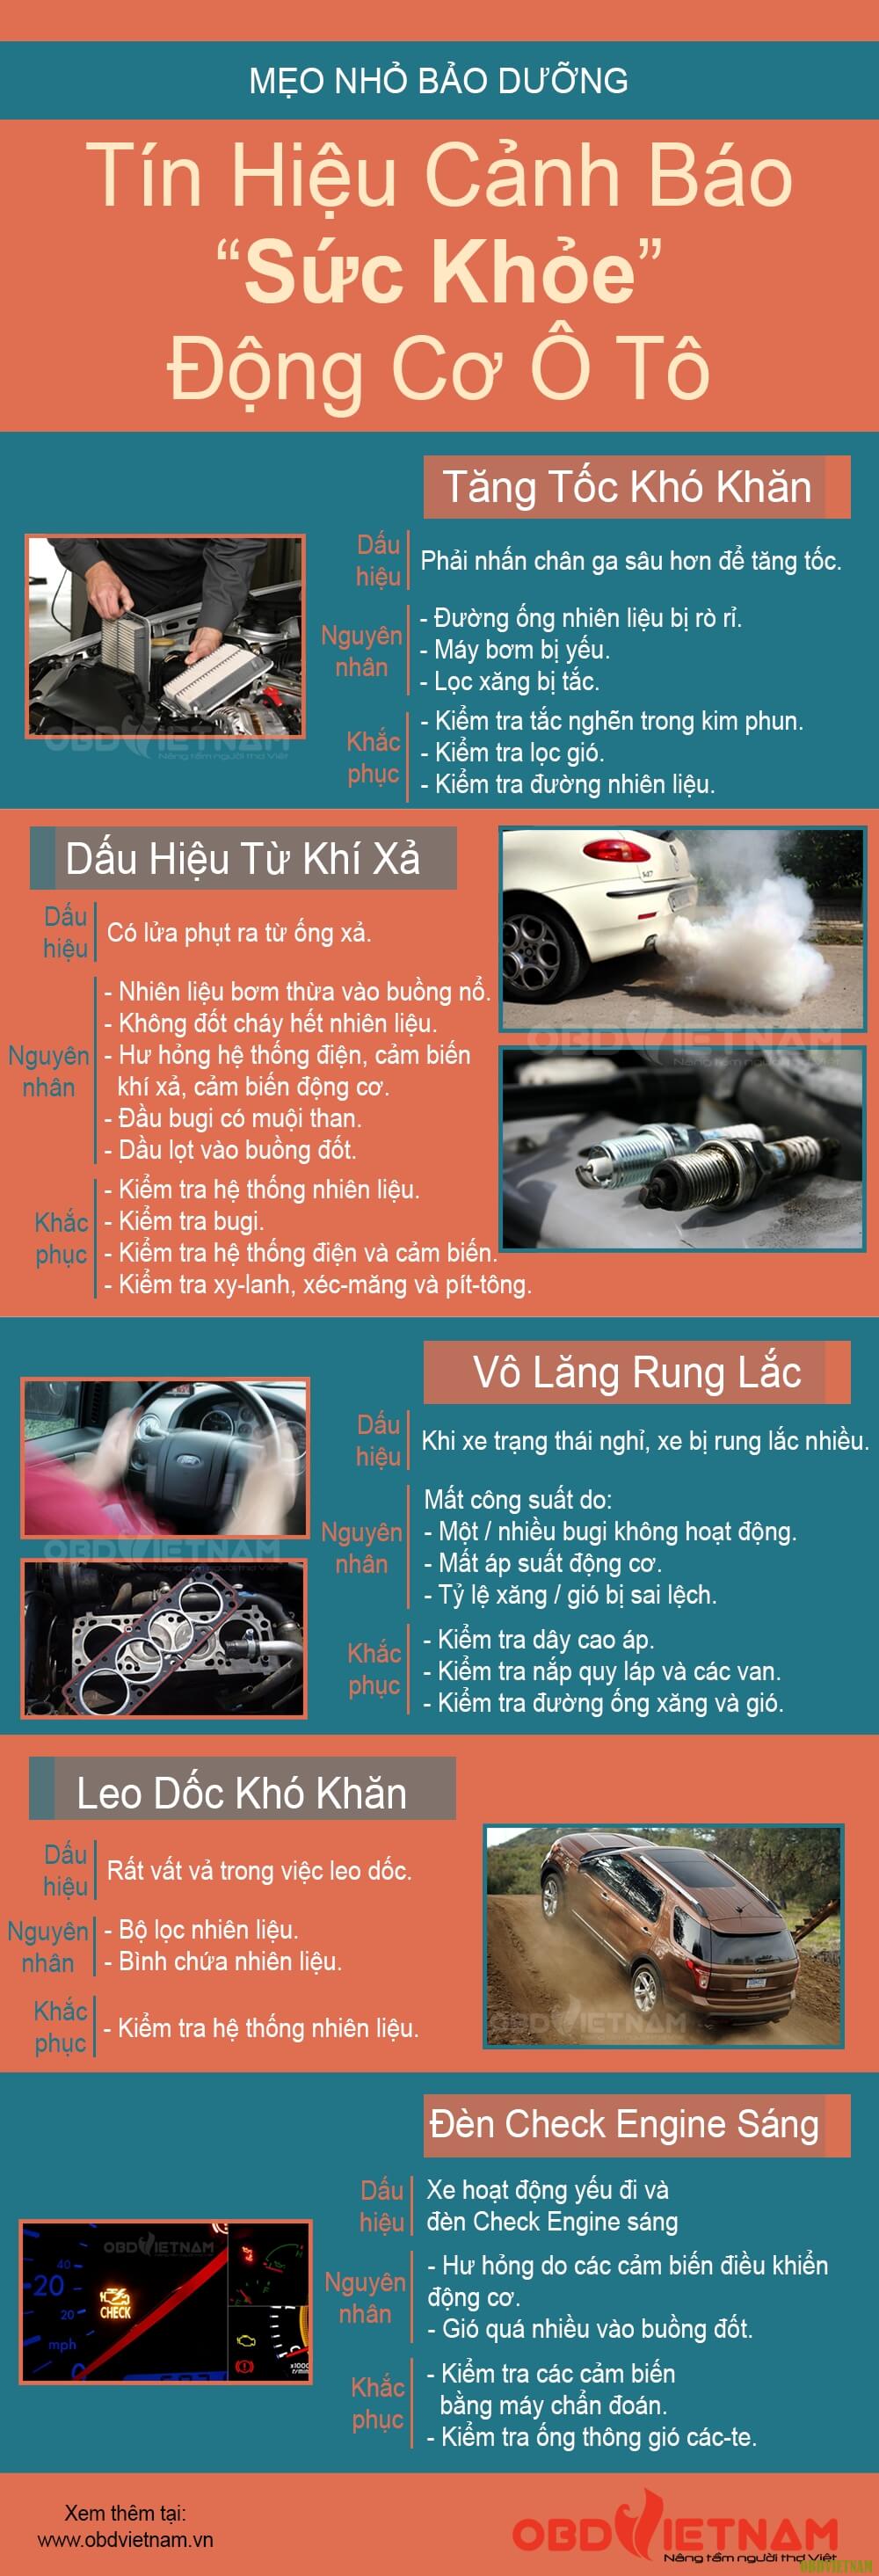 infographic-tin-hieu-canh-bao-suc-khoe-dong-co-o-to-obdvietnam-1_2